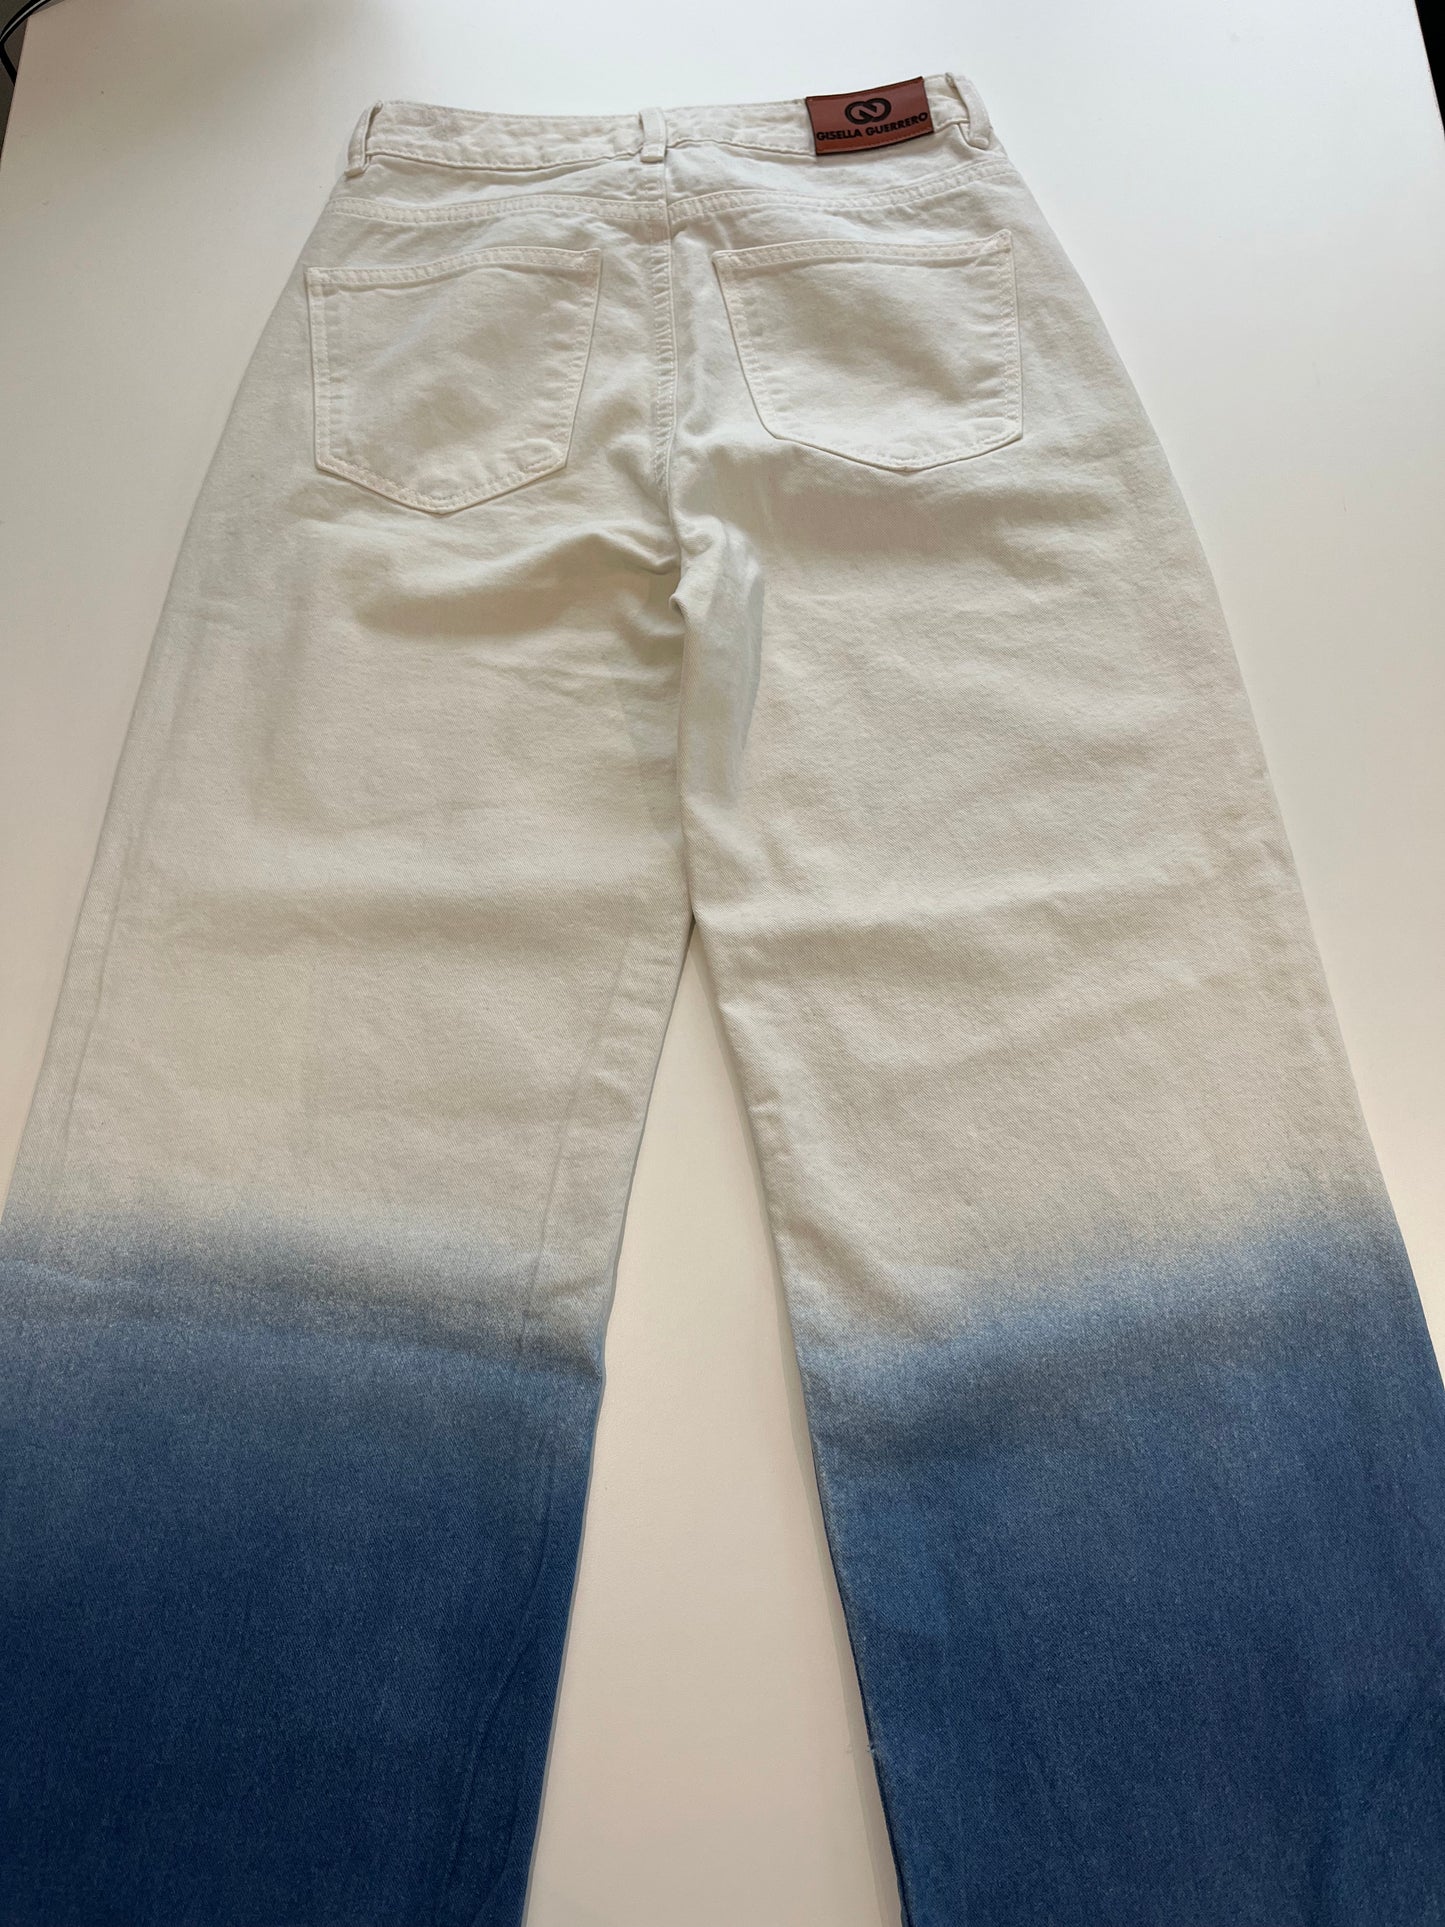 GG014: Gradient Jeans